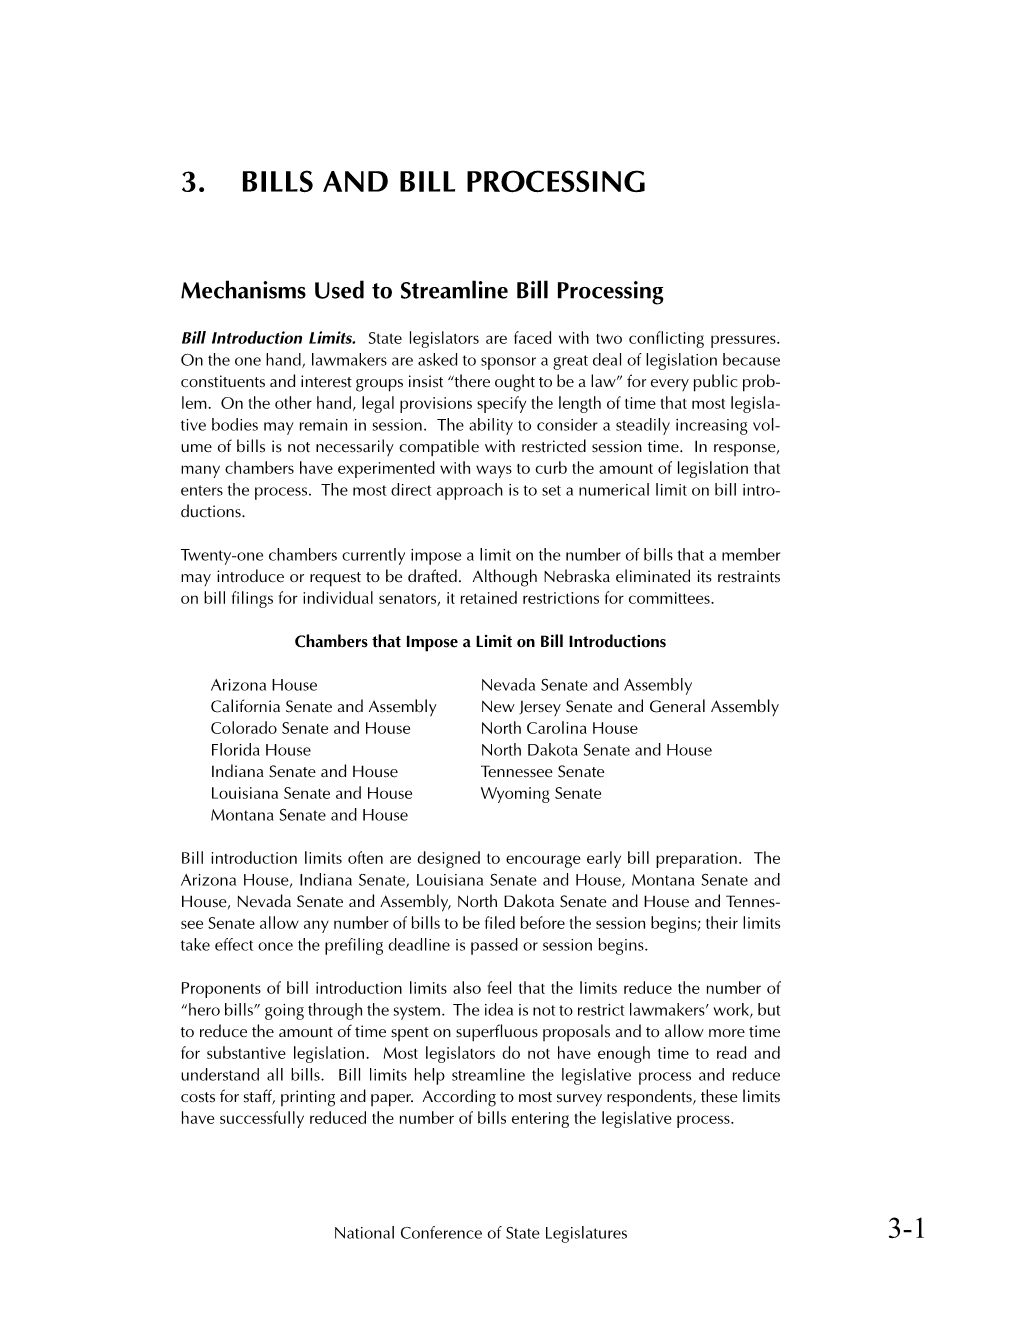 3-1 3. Bills and Bill Processing